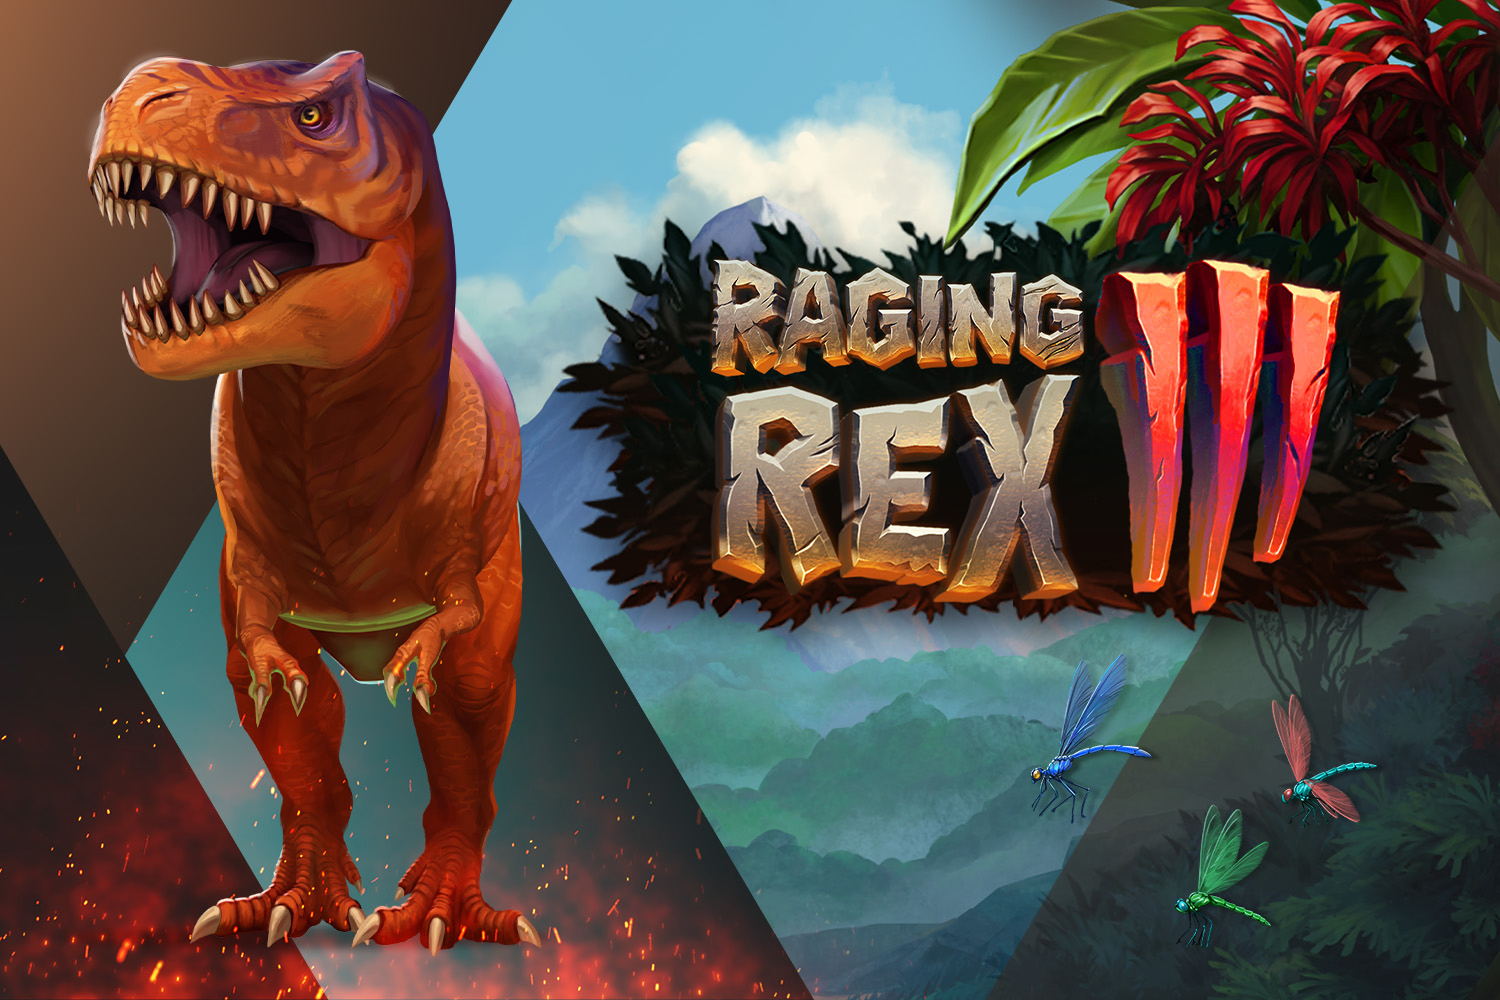 Play Ranging Rex 3 at SkyCity Online Casino